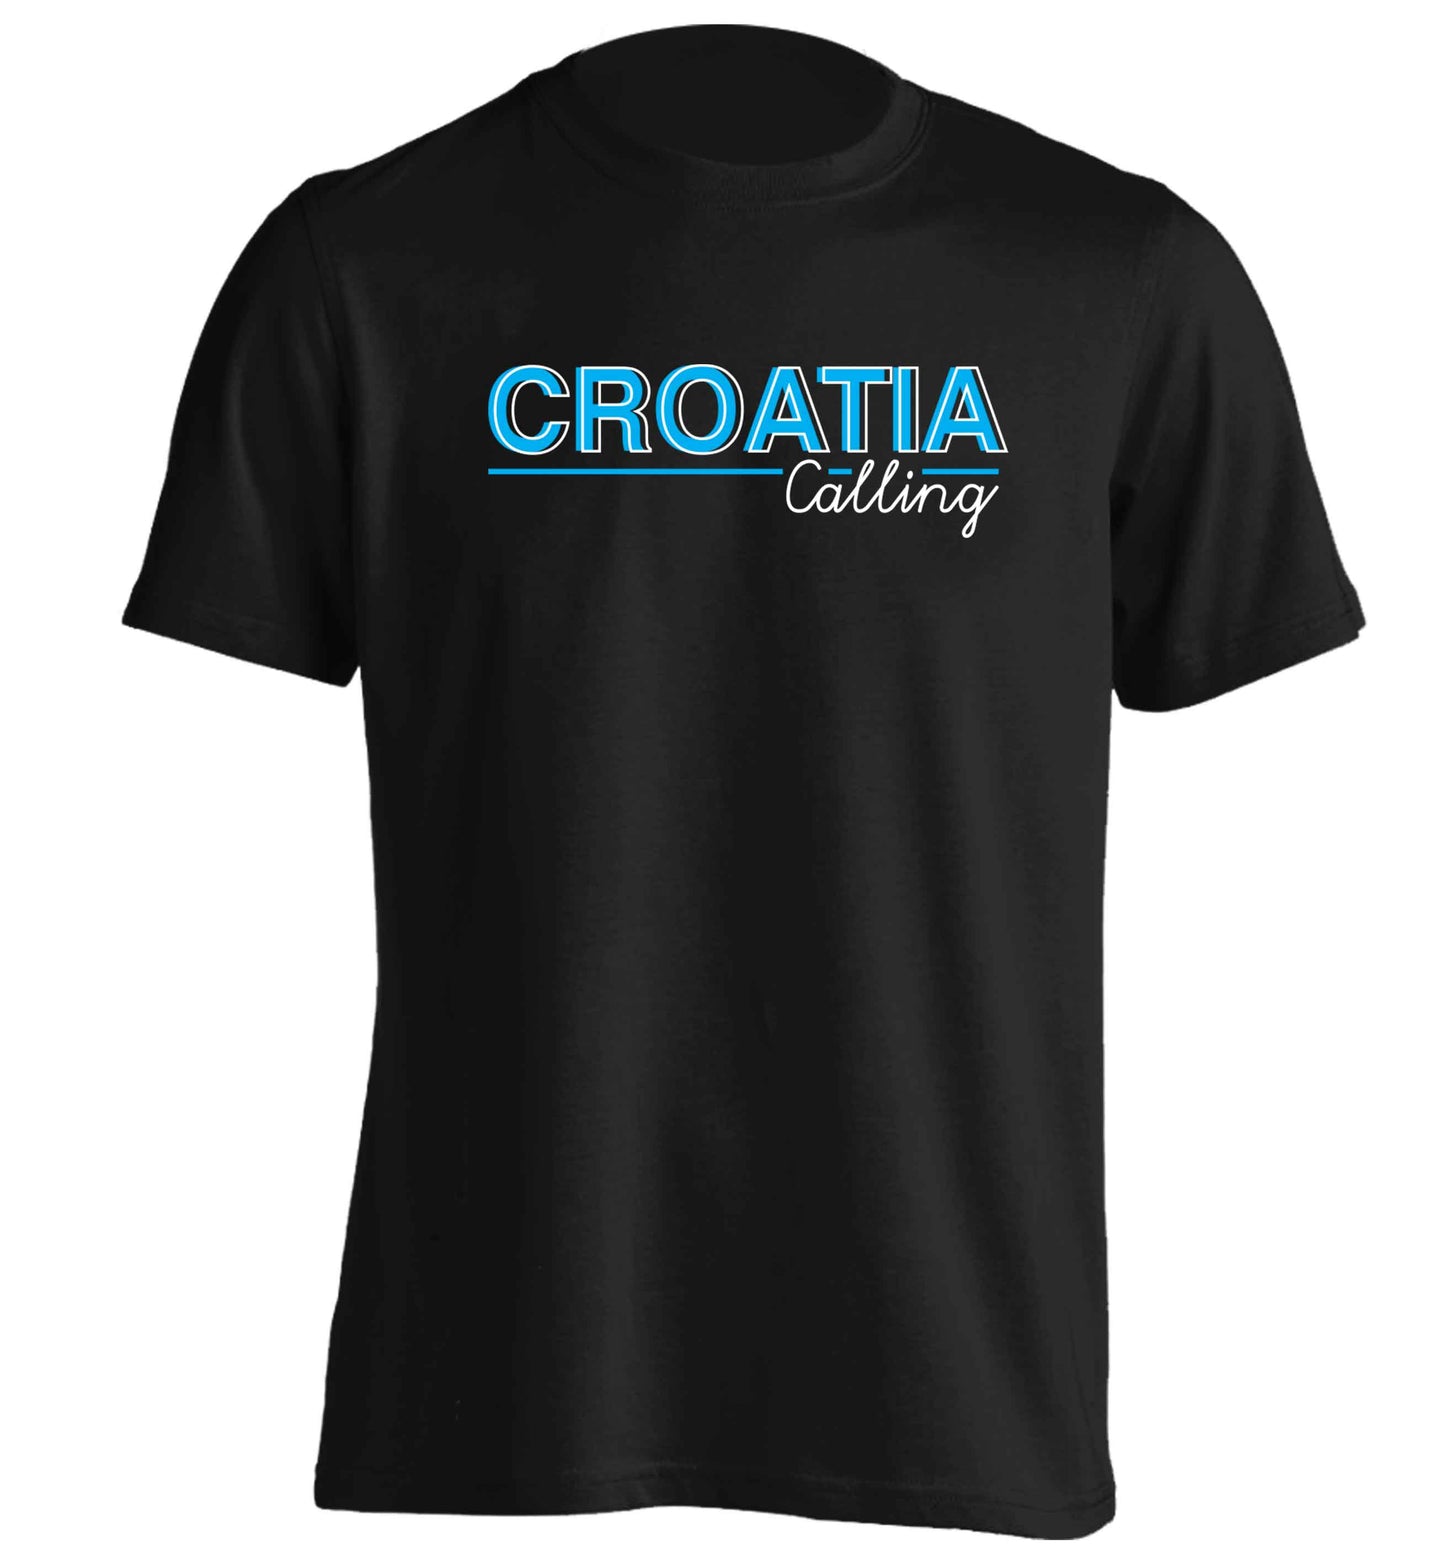 Croatia calling adults unisex black Tshirt 2XL